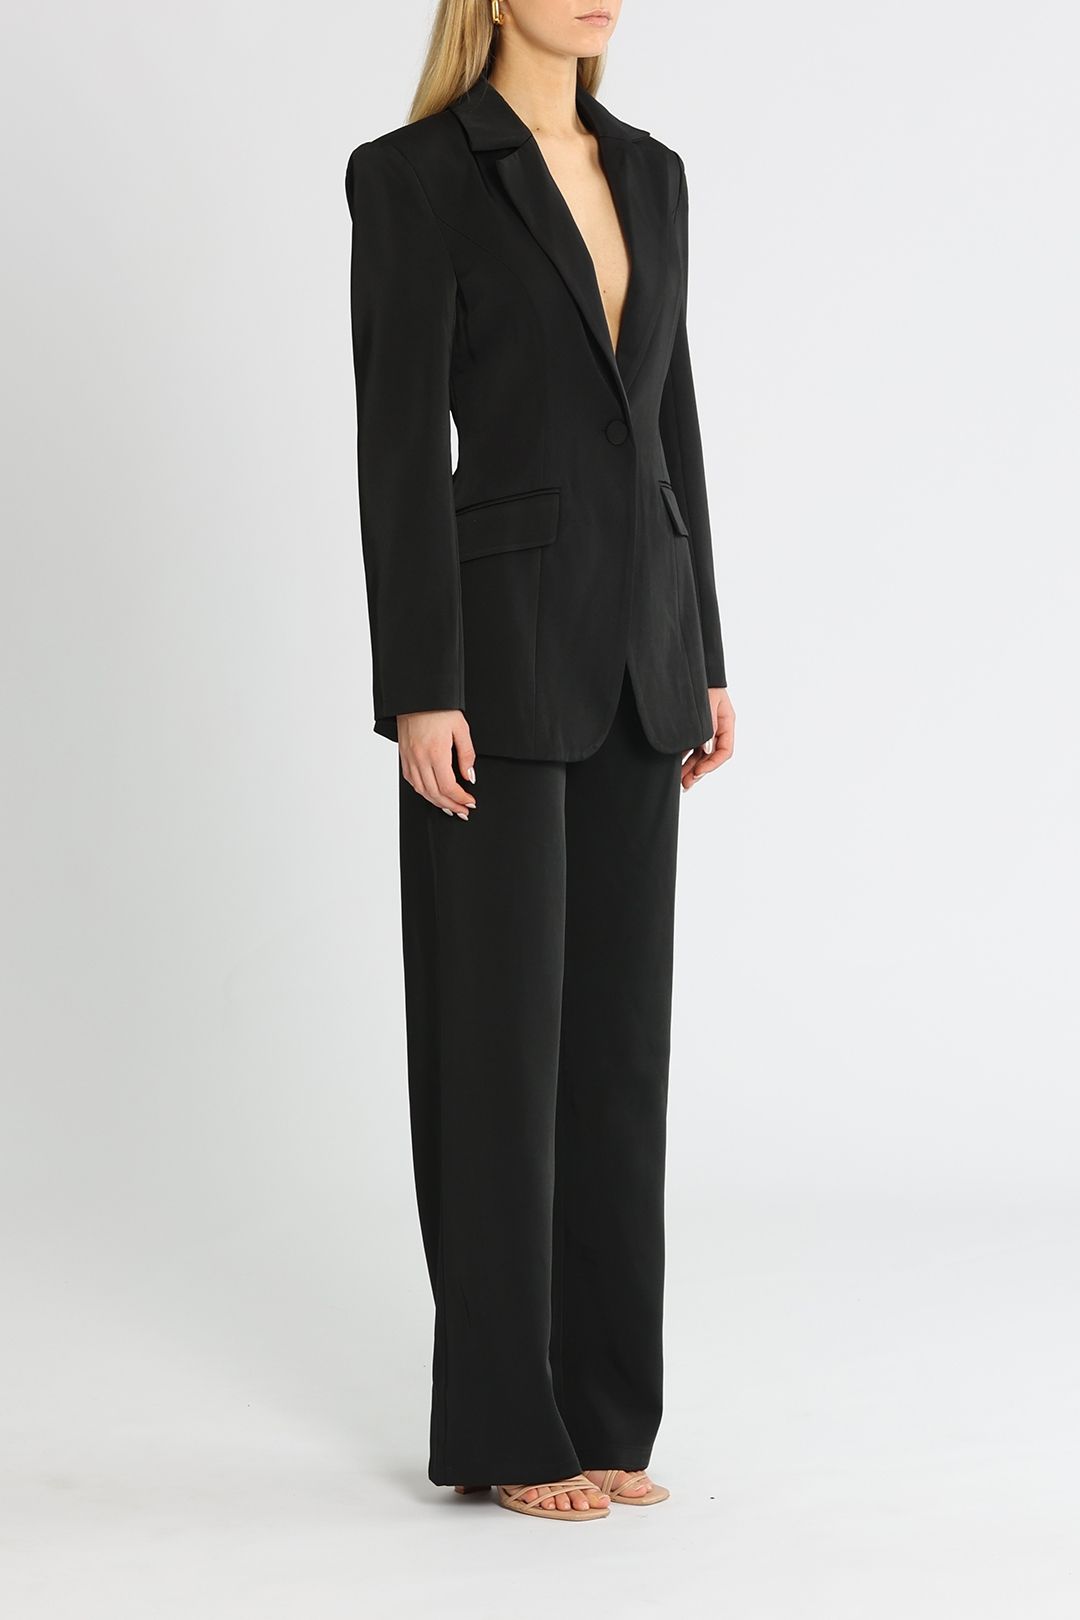 Kianna Sienna Blazer and Pant Set Black Suit